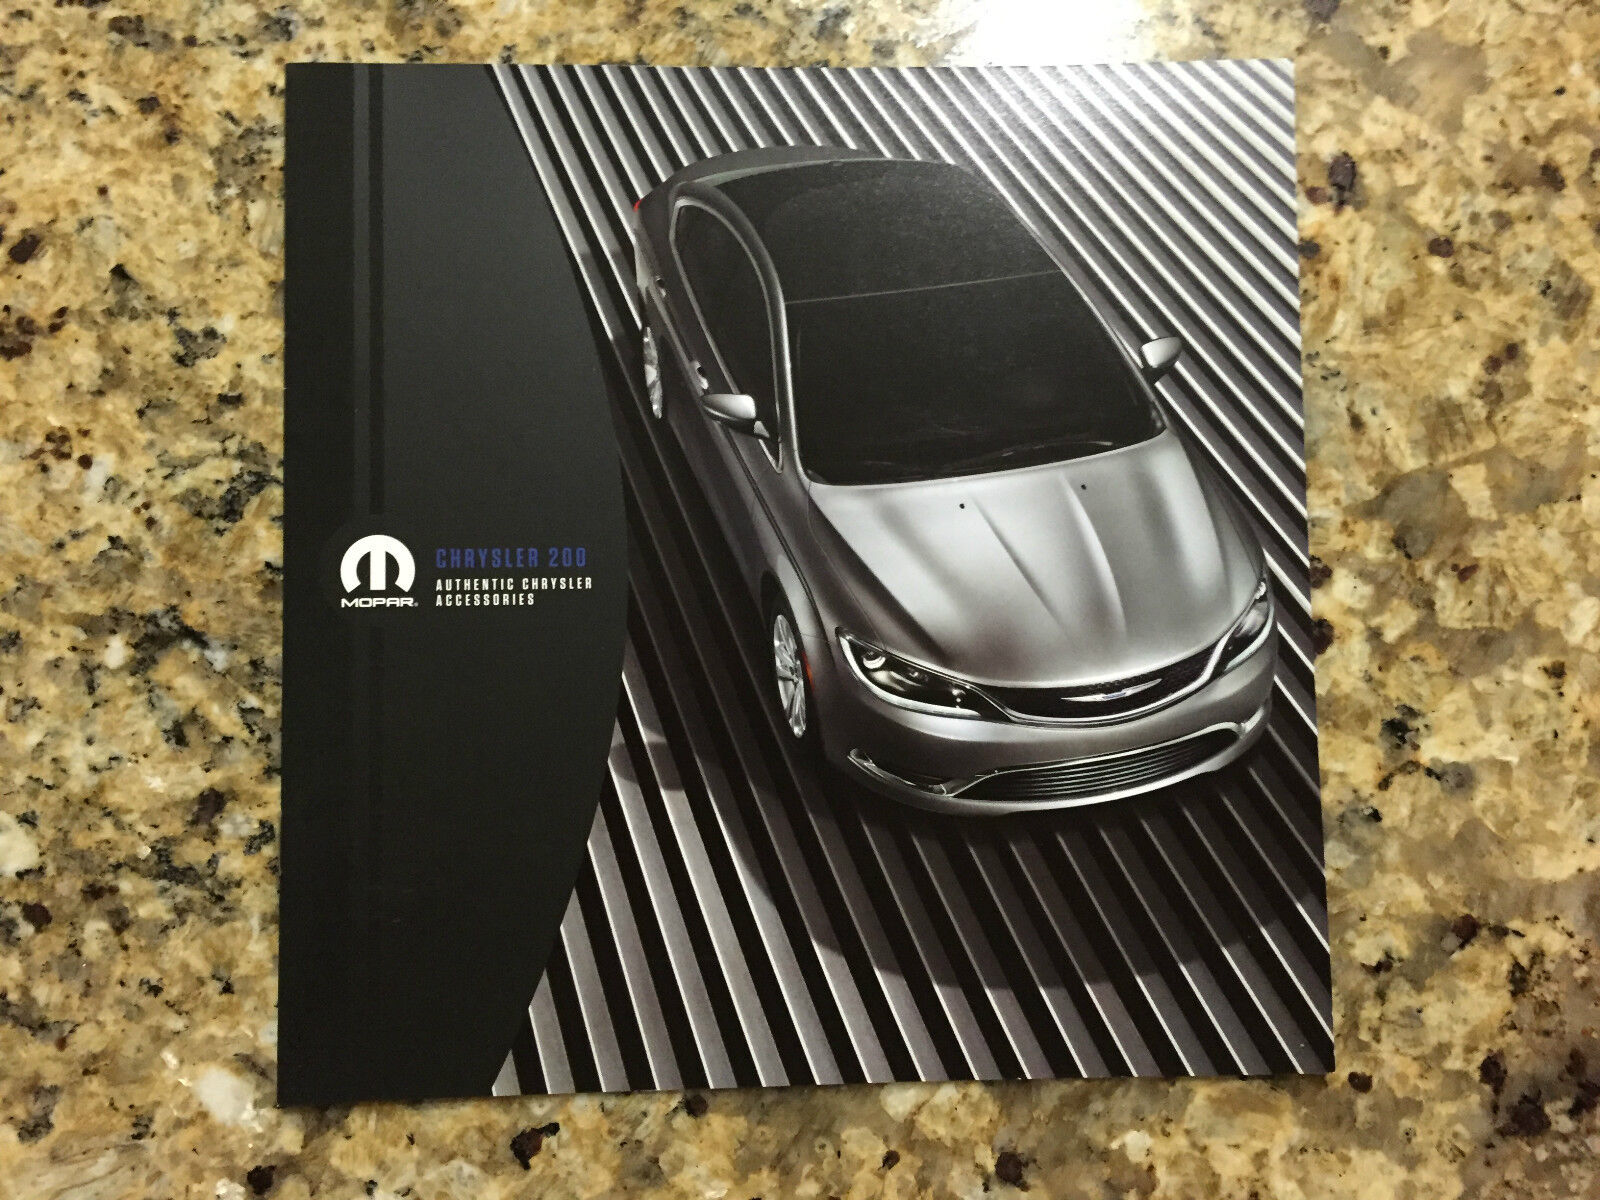 2015 Chrysler 200 Accessories 8-page Original Sales Brochure